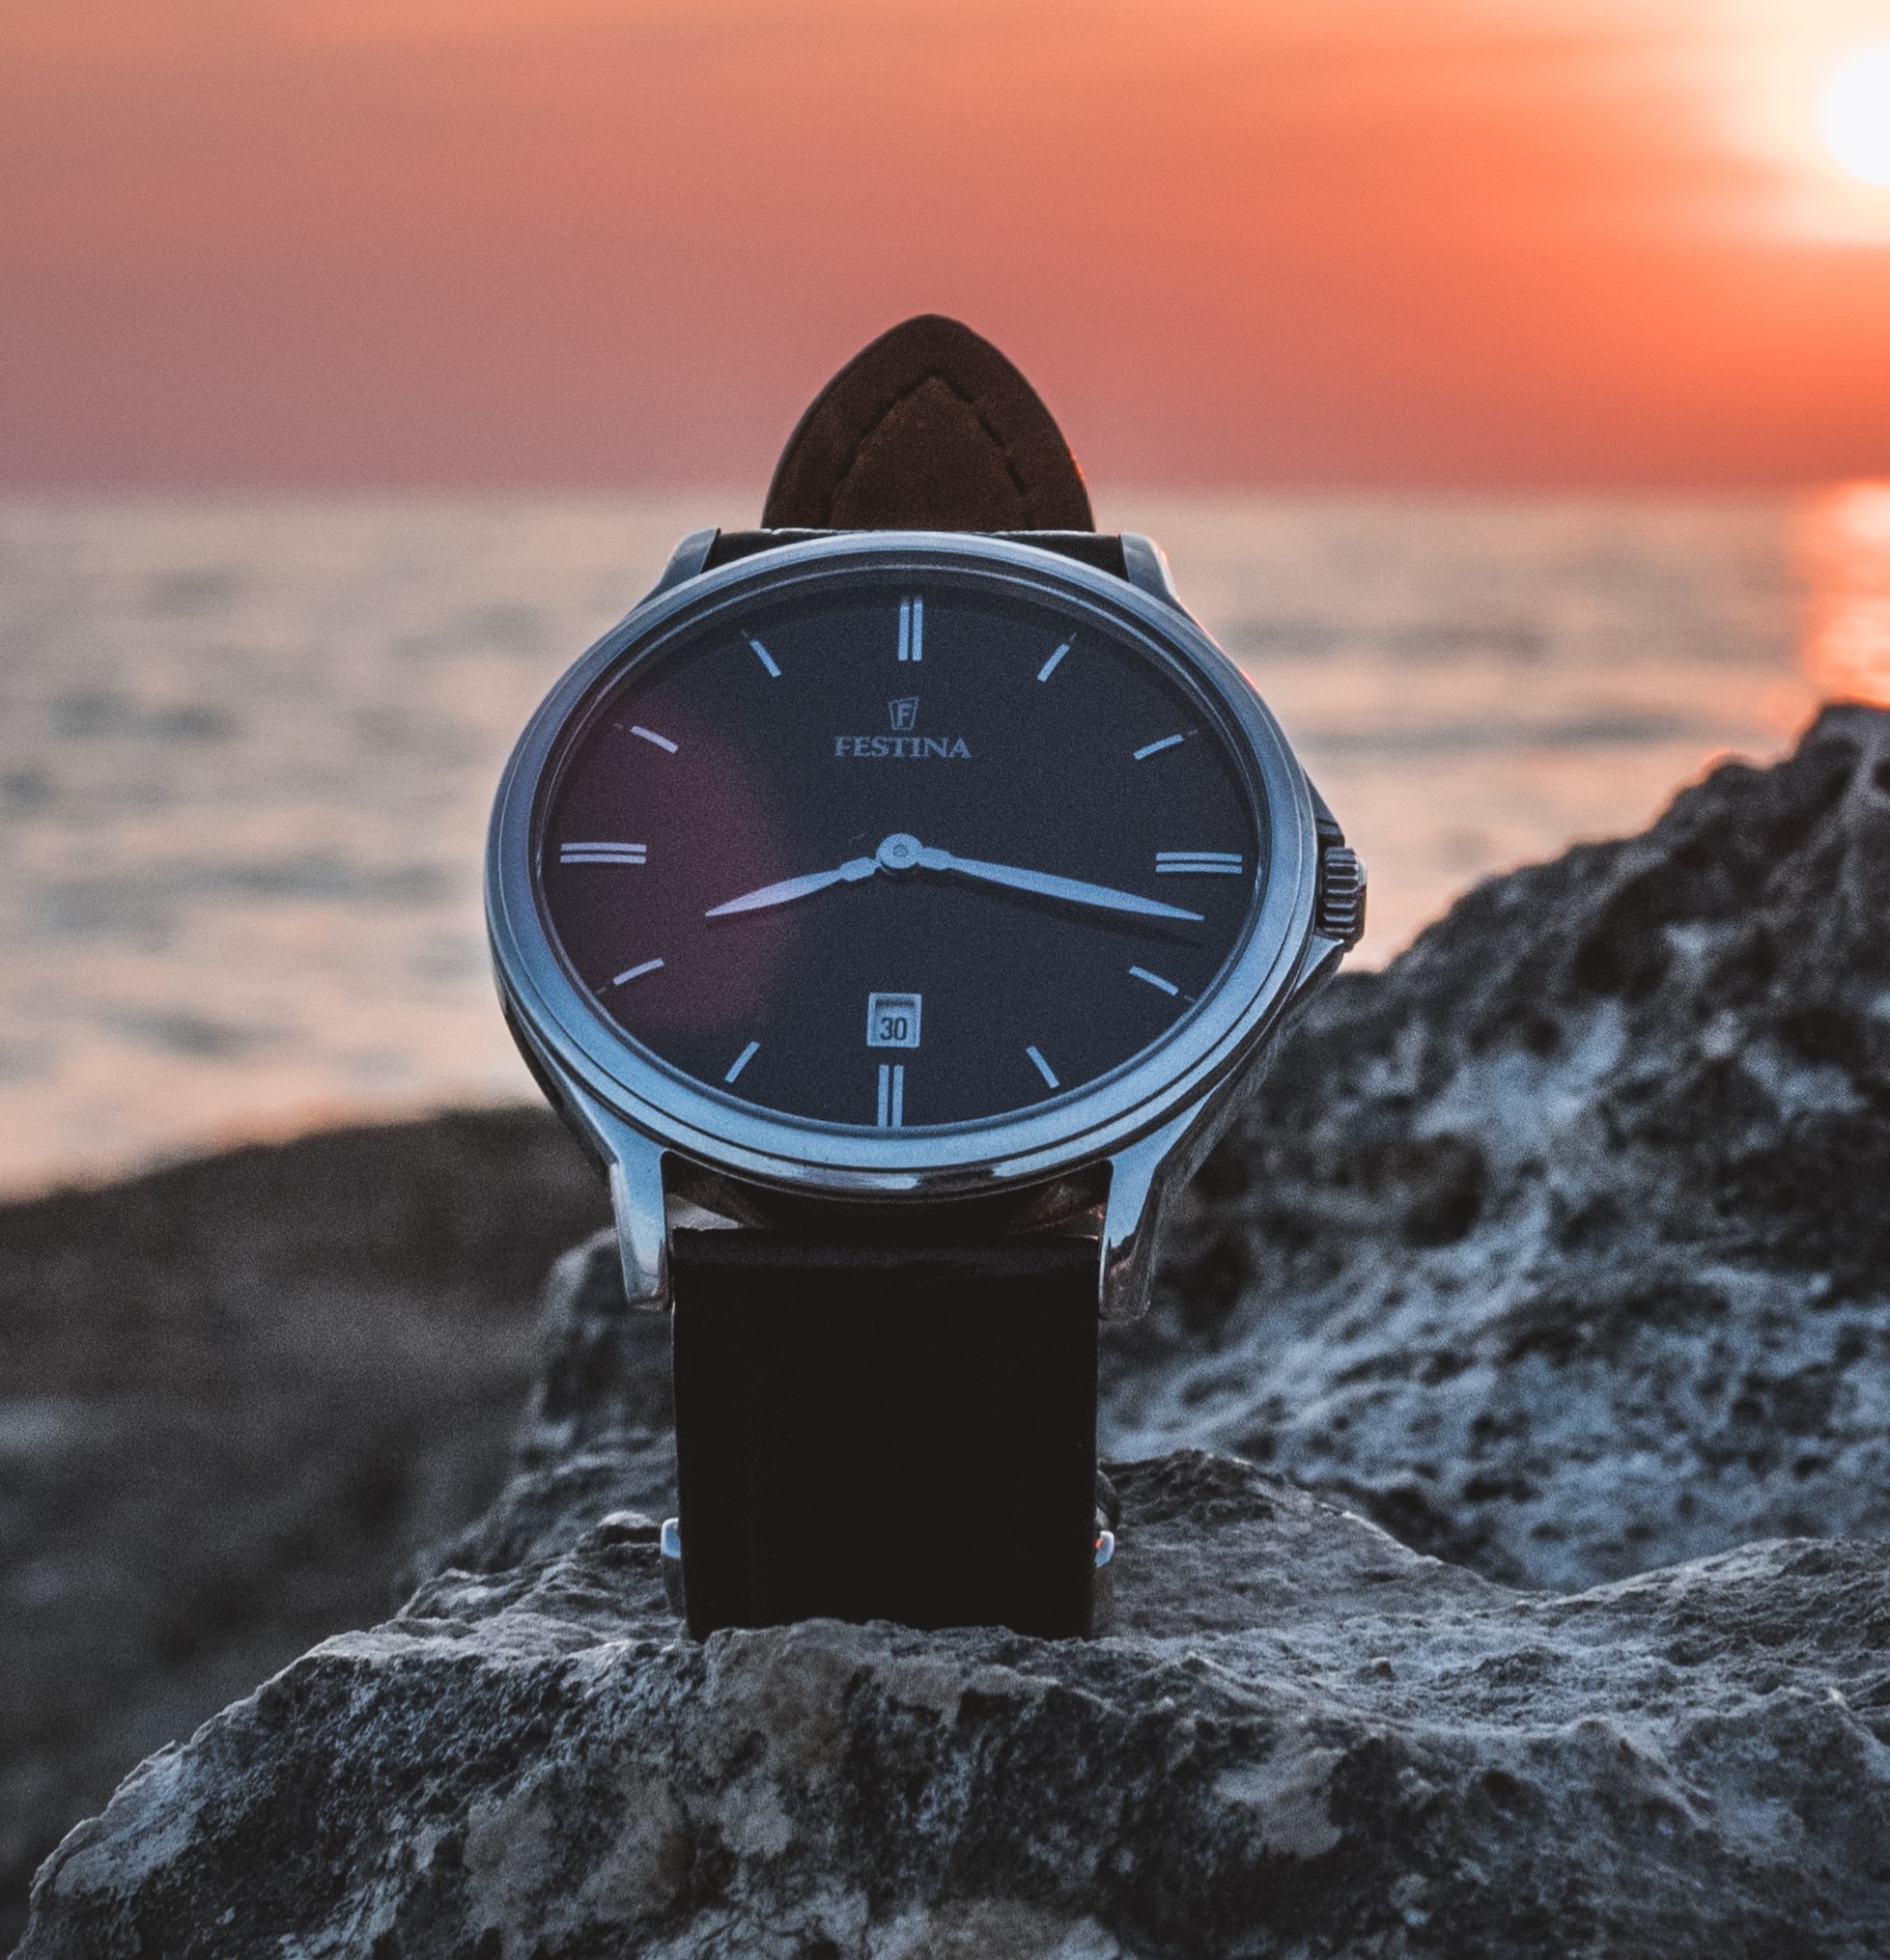 fESTINA sleek leather wrist watch